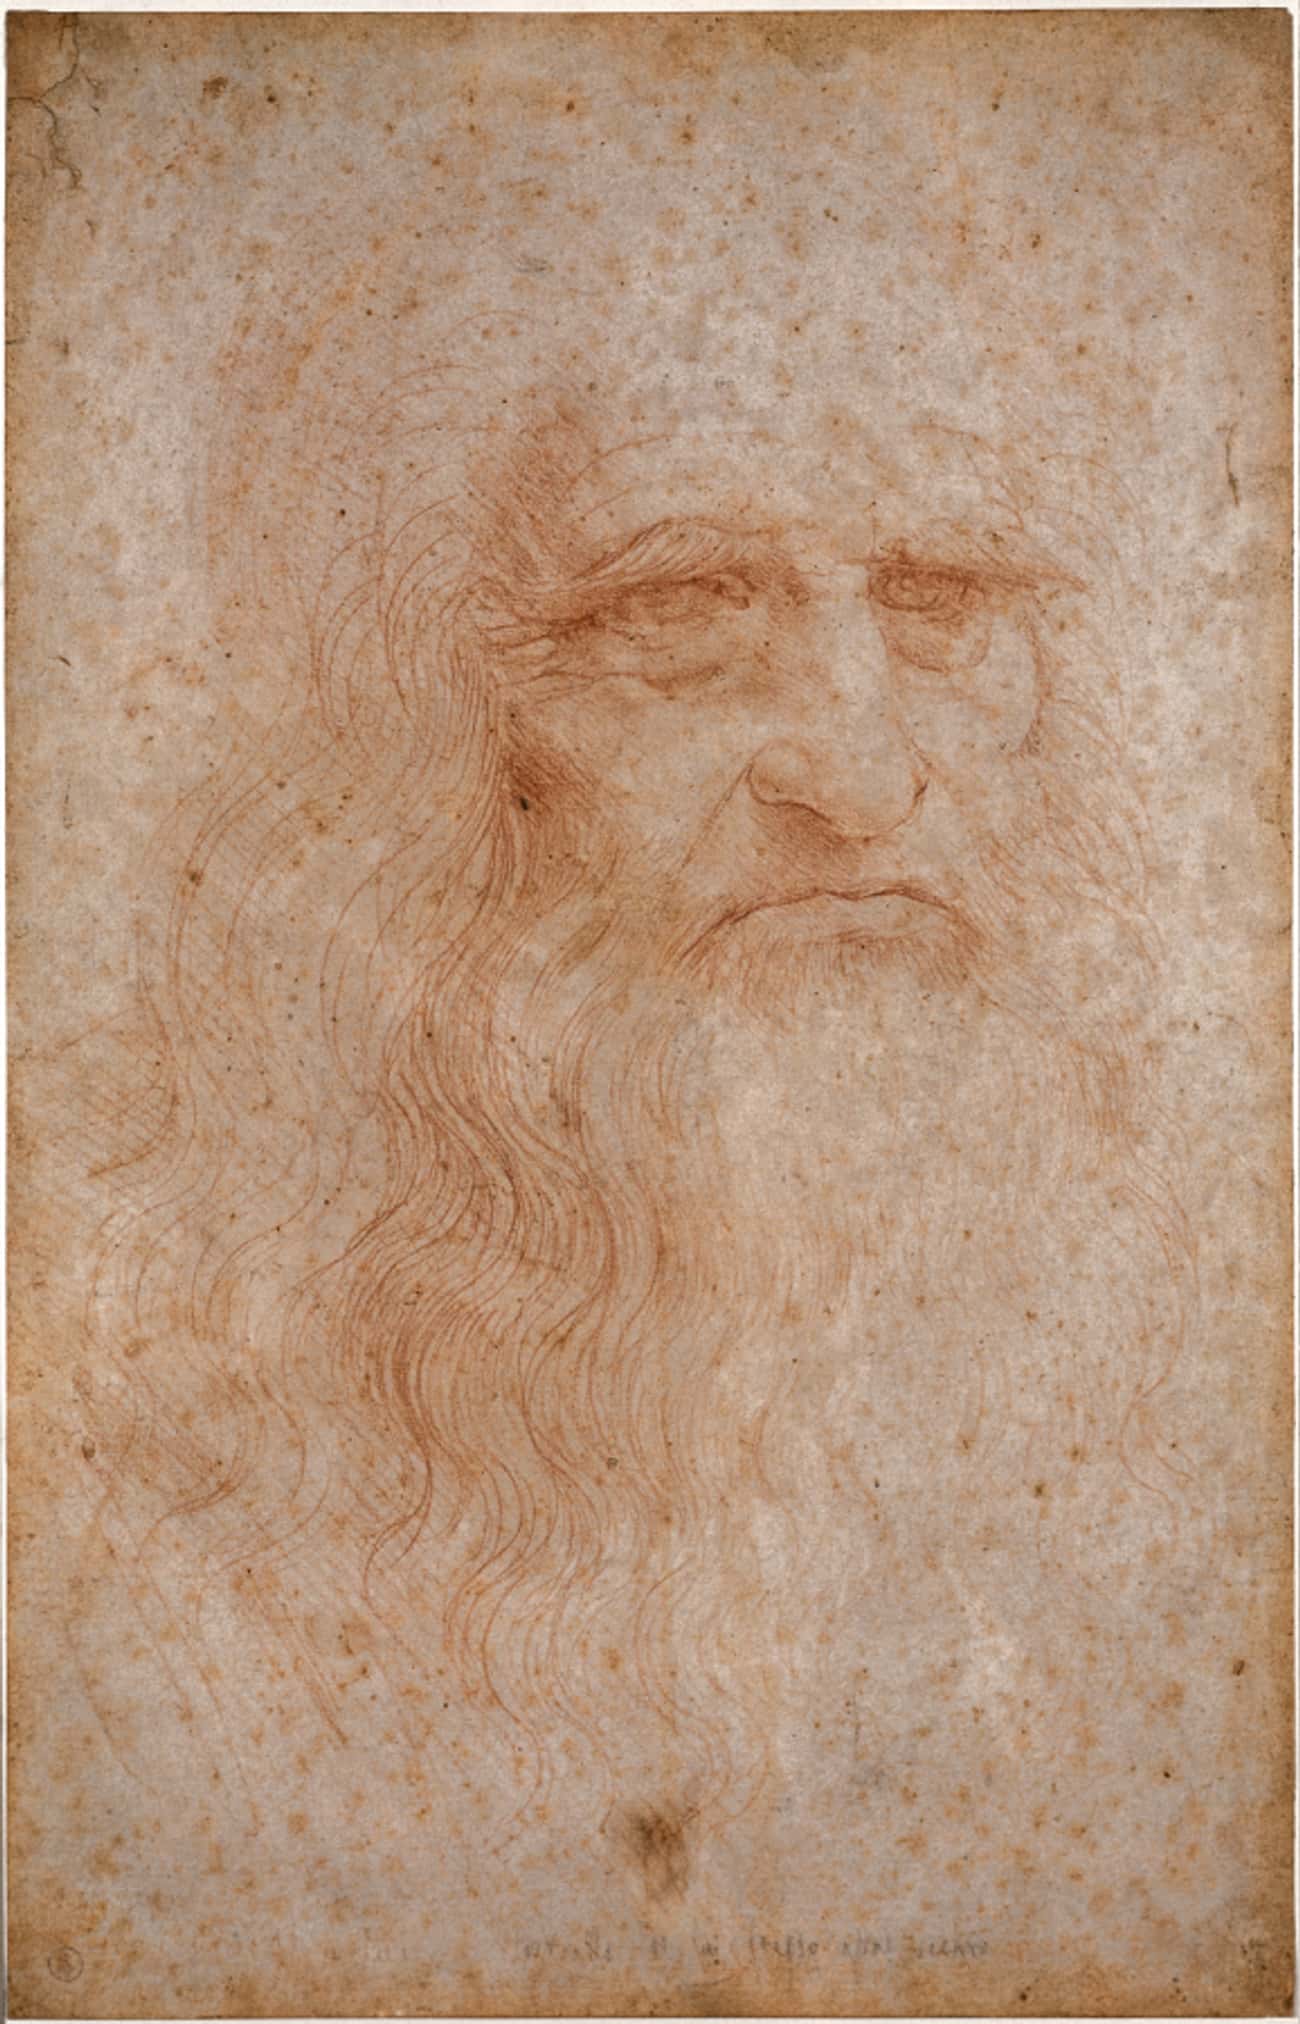 Leonardo Da Vinci Was A Genius Artist, Scientist, And Inventor